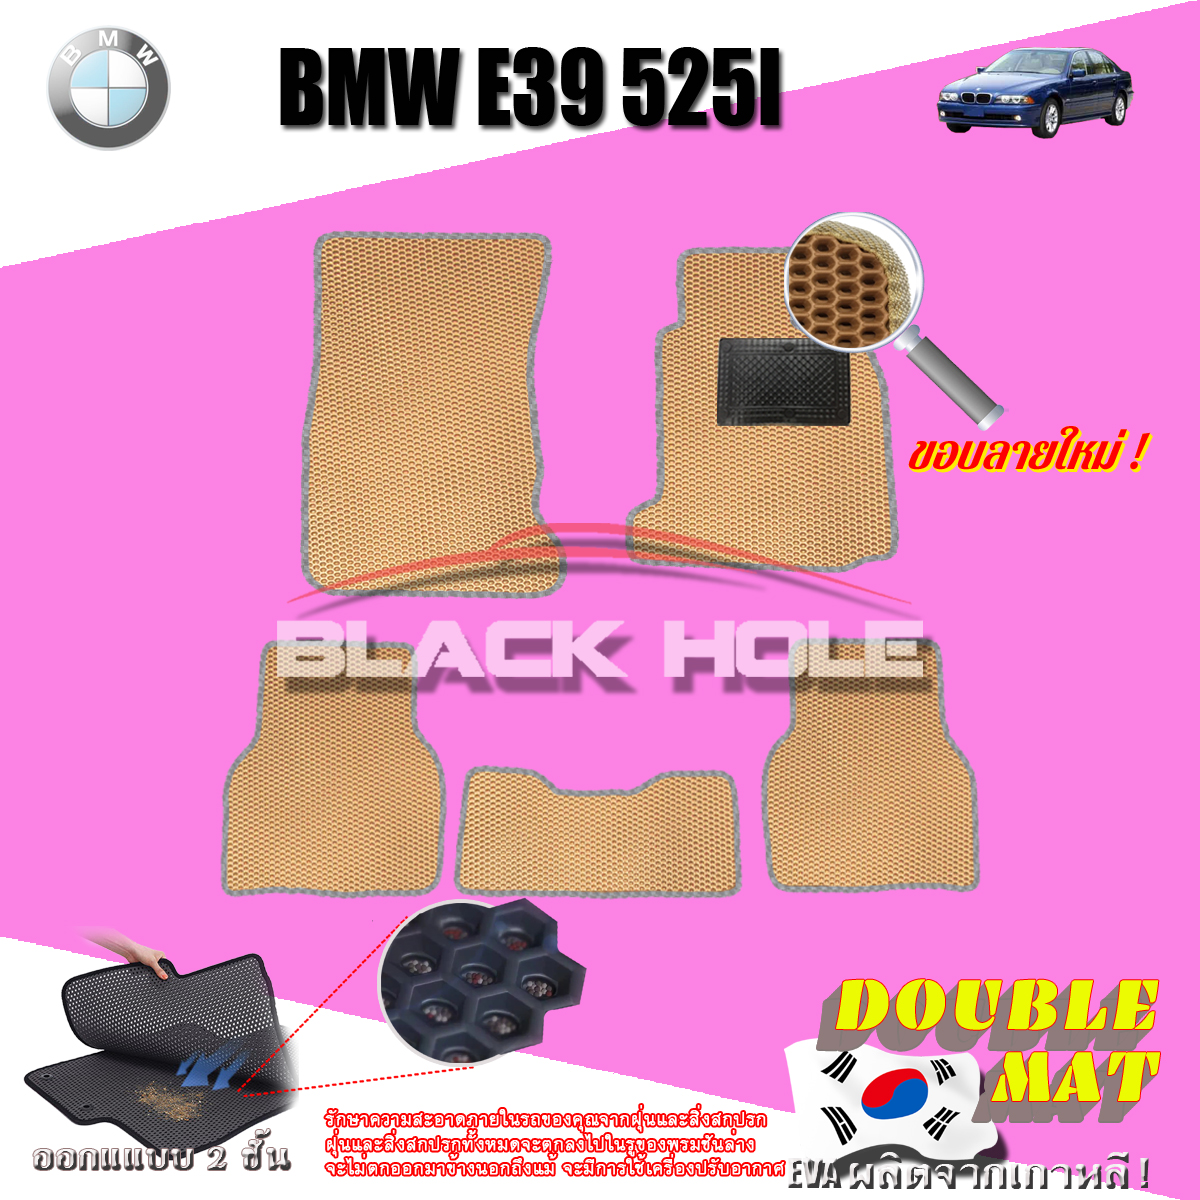 BMW E39 525i ปี 1995 - ปี 2004 พรมรถยนต์E39 พรมเข้ารูปสองชั้นแบบรูรังผึ้ง Blackhole Double Mat (ชุดห้องโดยสาร) สี SET B ( 5 Pcs. ) New Velcro Beige - เบจขอบลายใหม่ ( 5 ชิ้น )